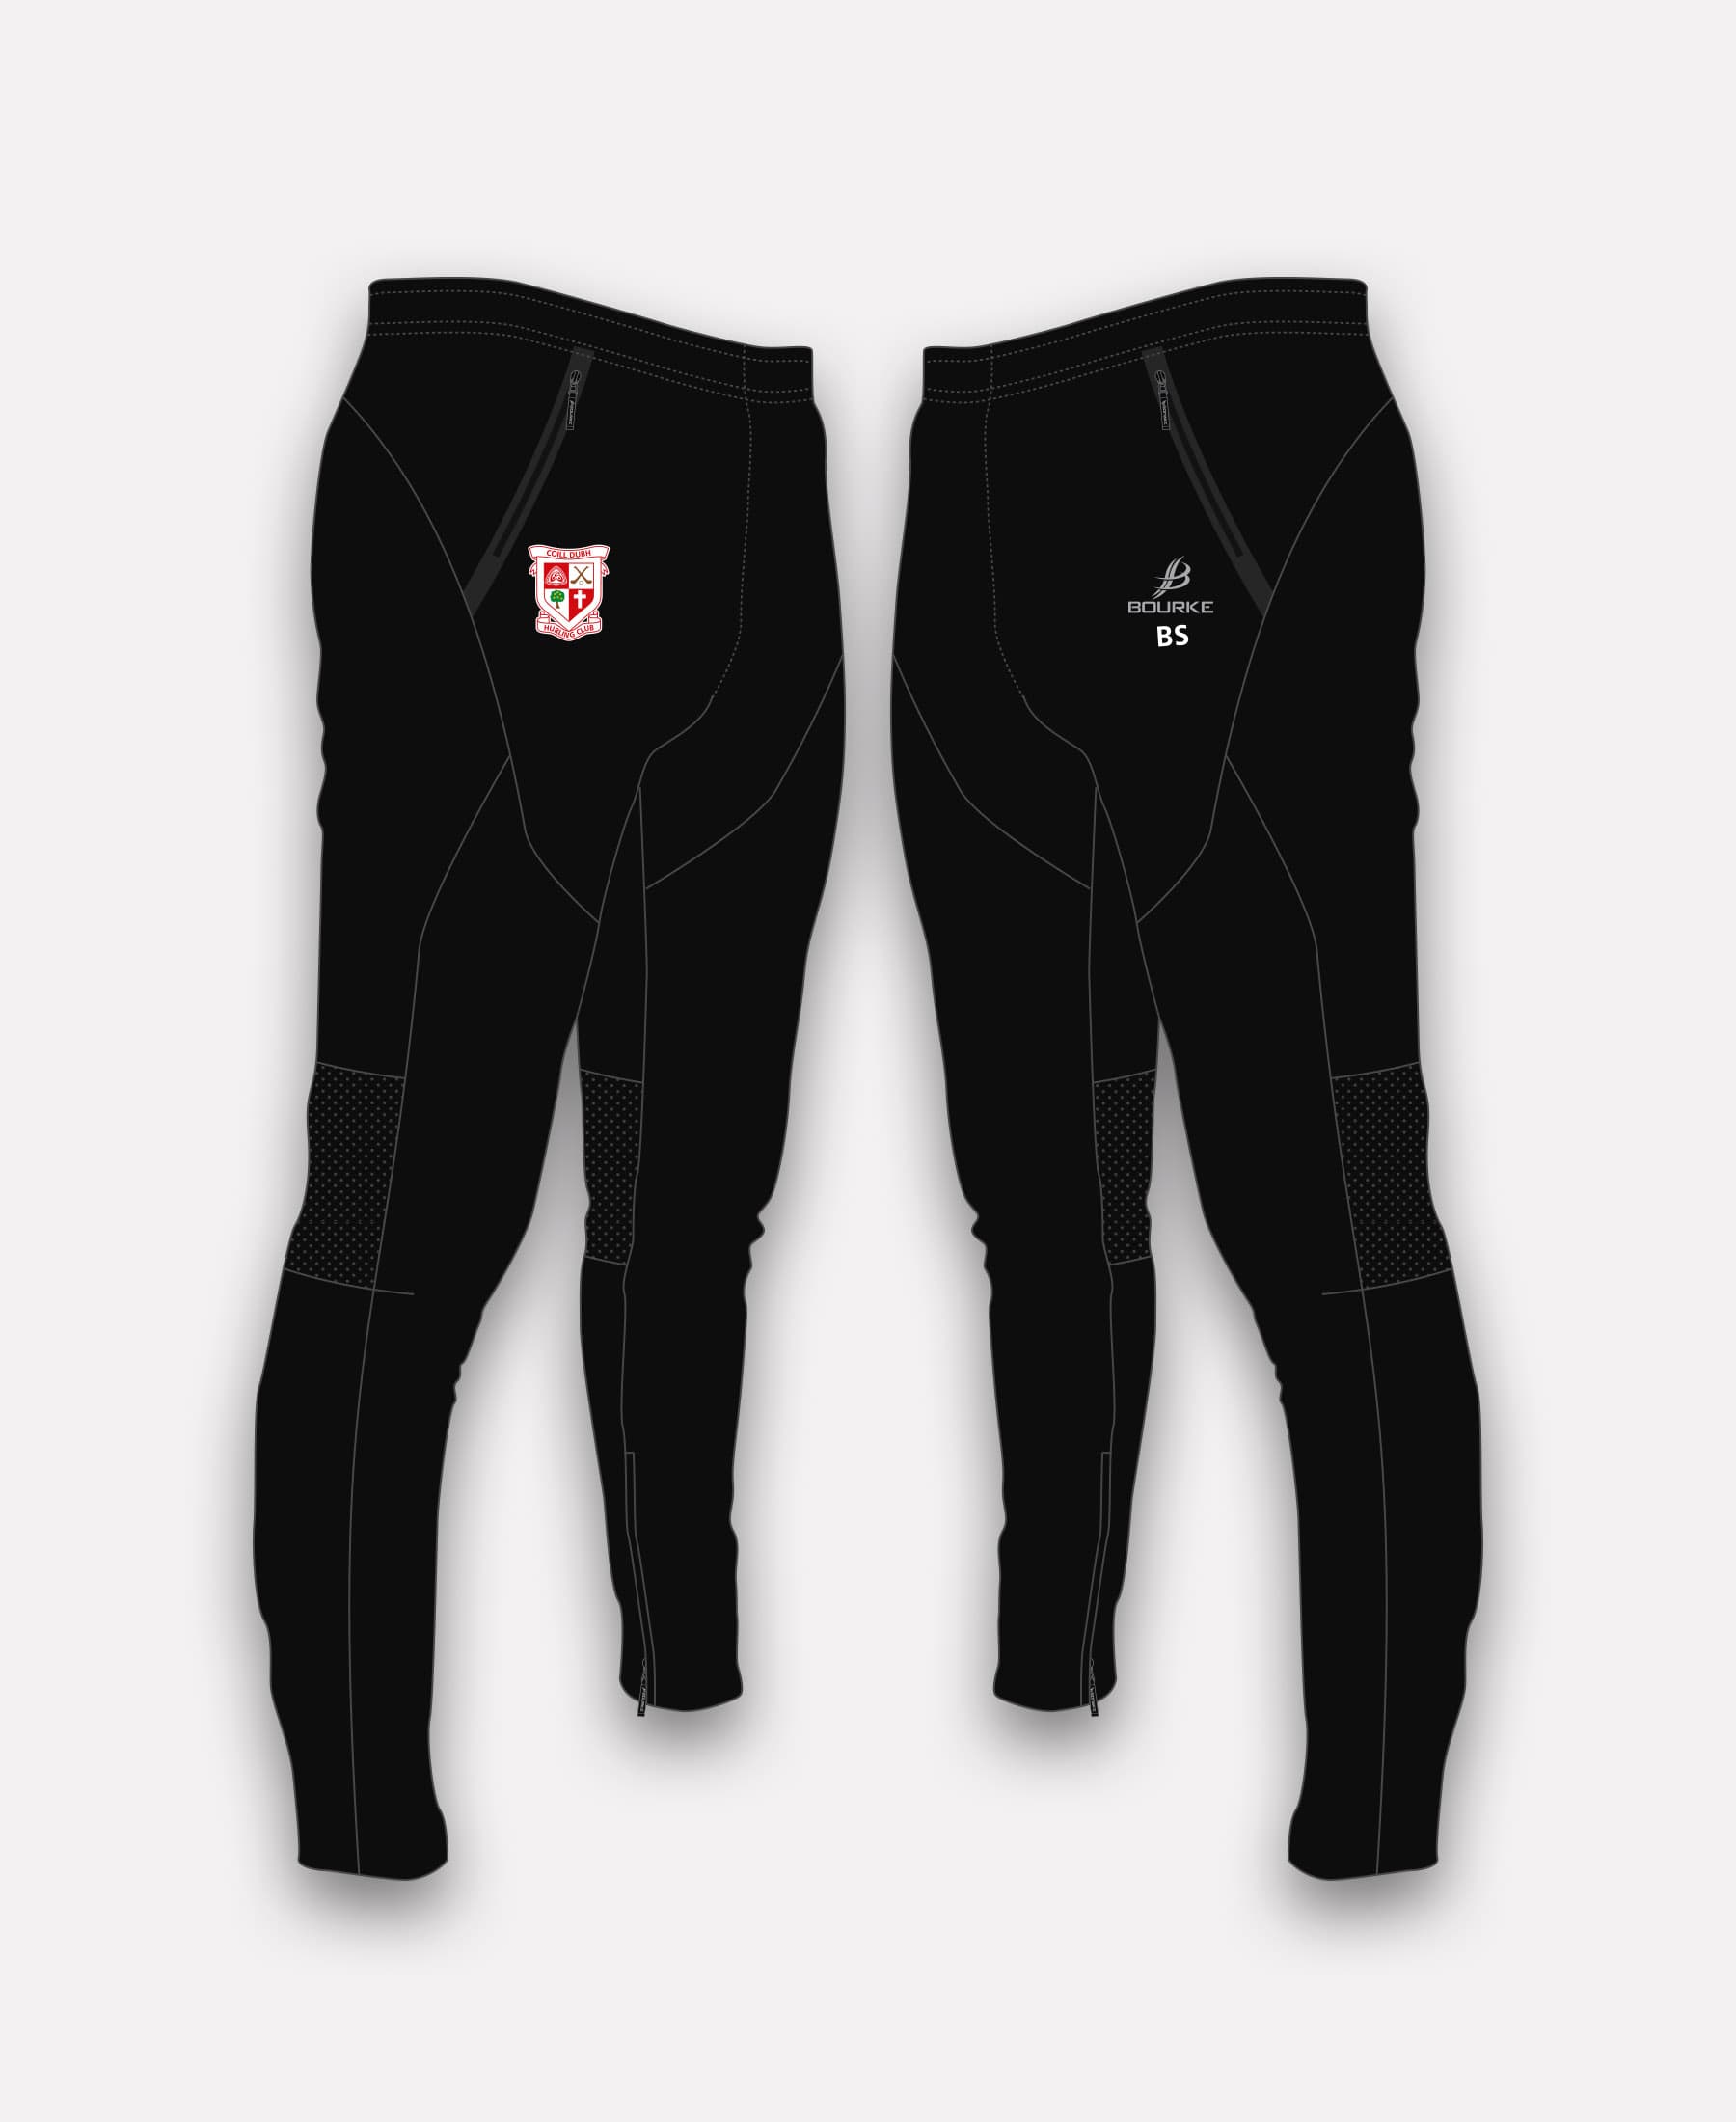 Coill Dubh Hurling Club Croga Skinny Pants (Black)